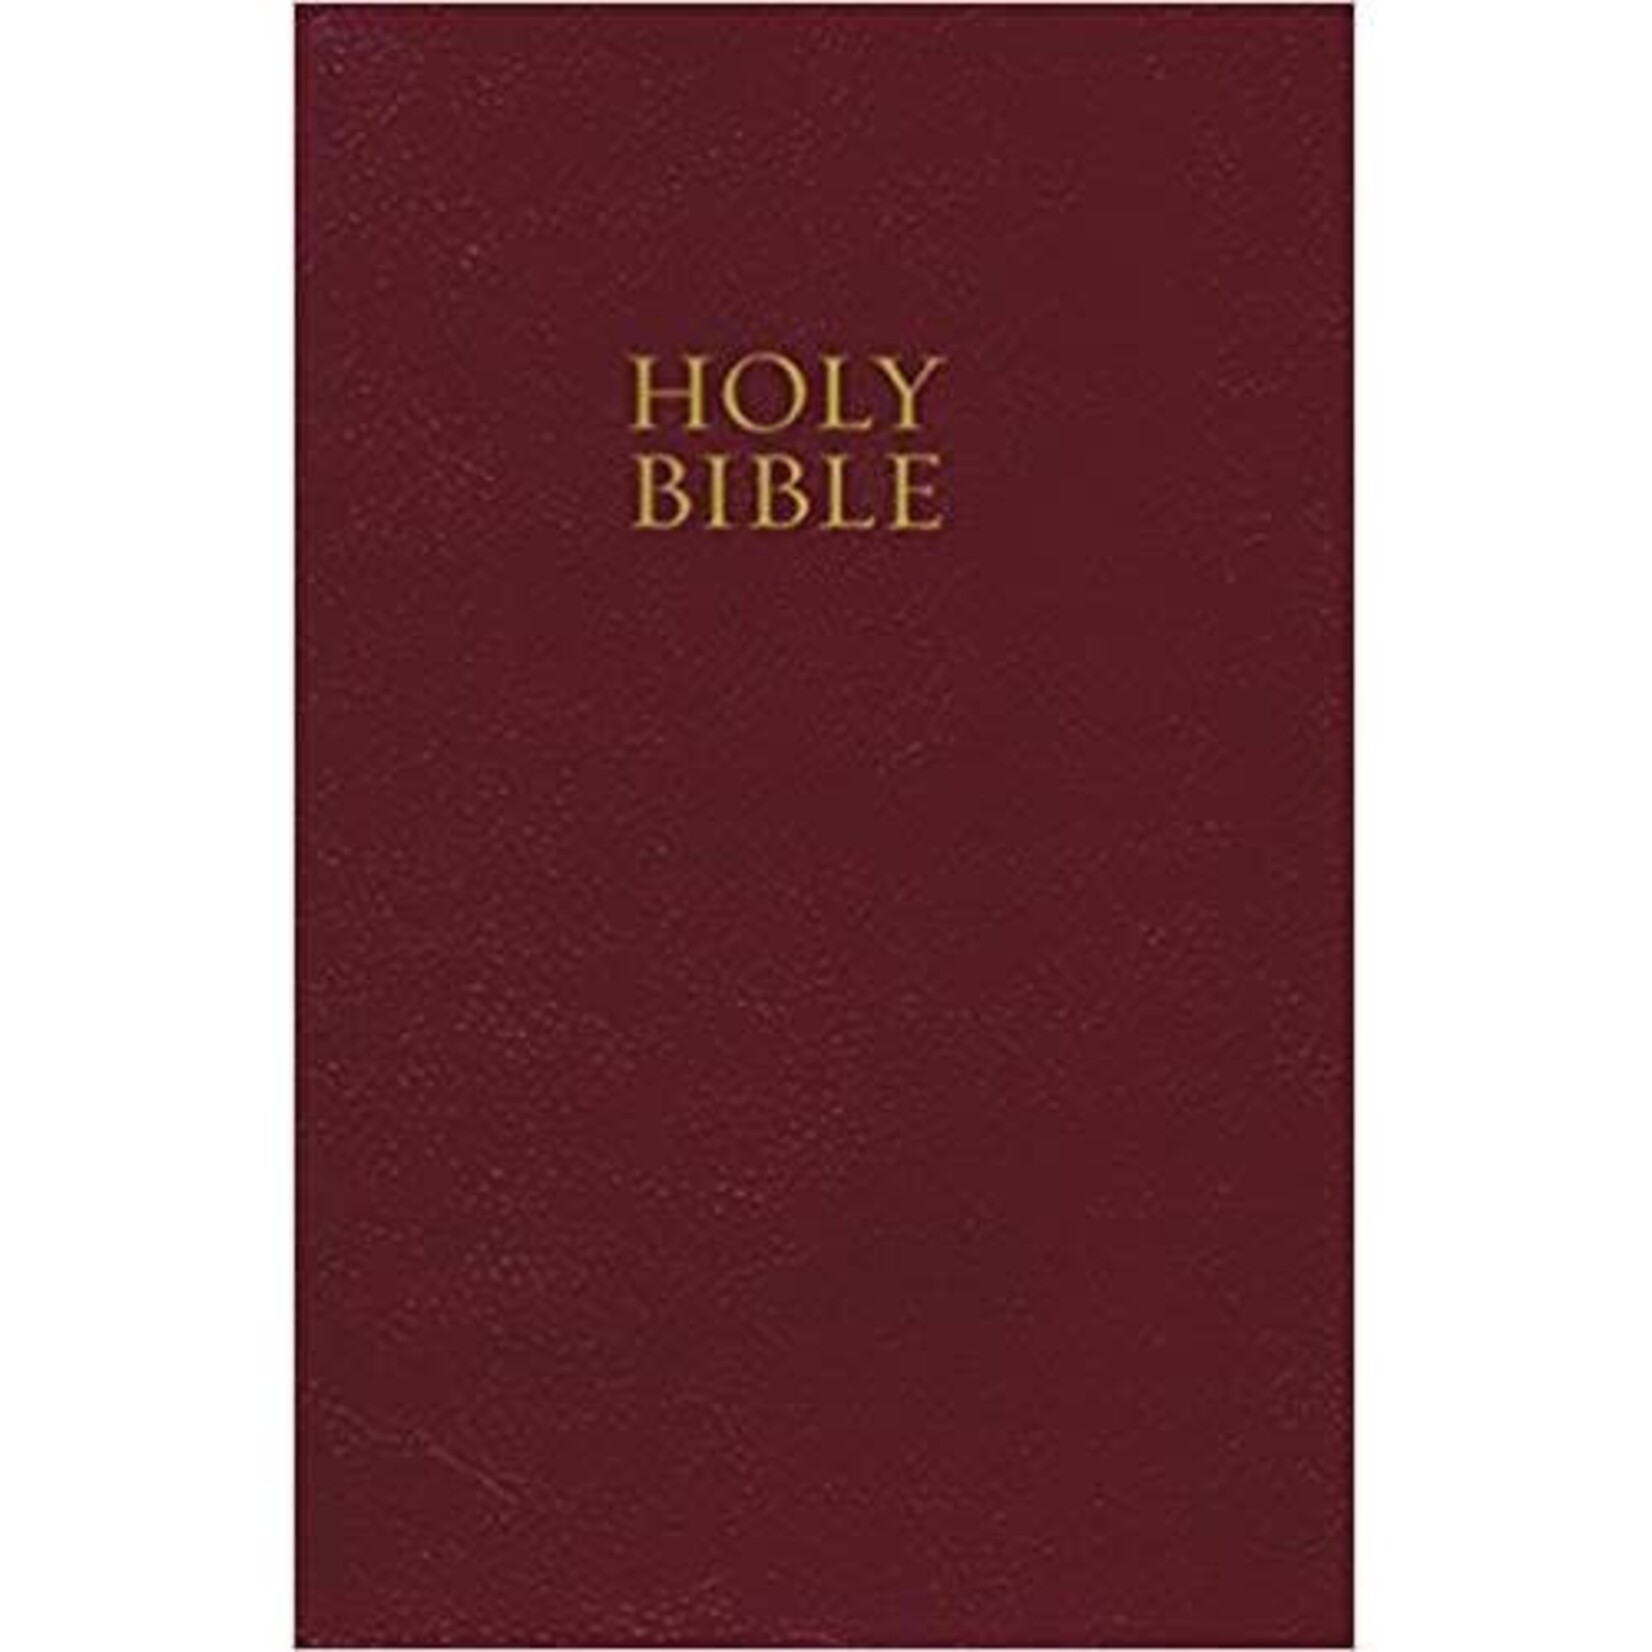 Holy Bible (NKJV) New King James Version Pew Bible Hardcover Burgundy